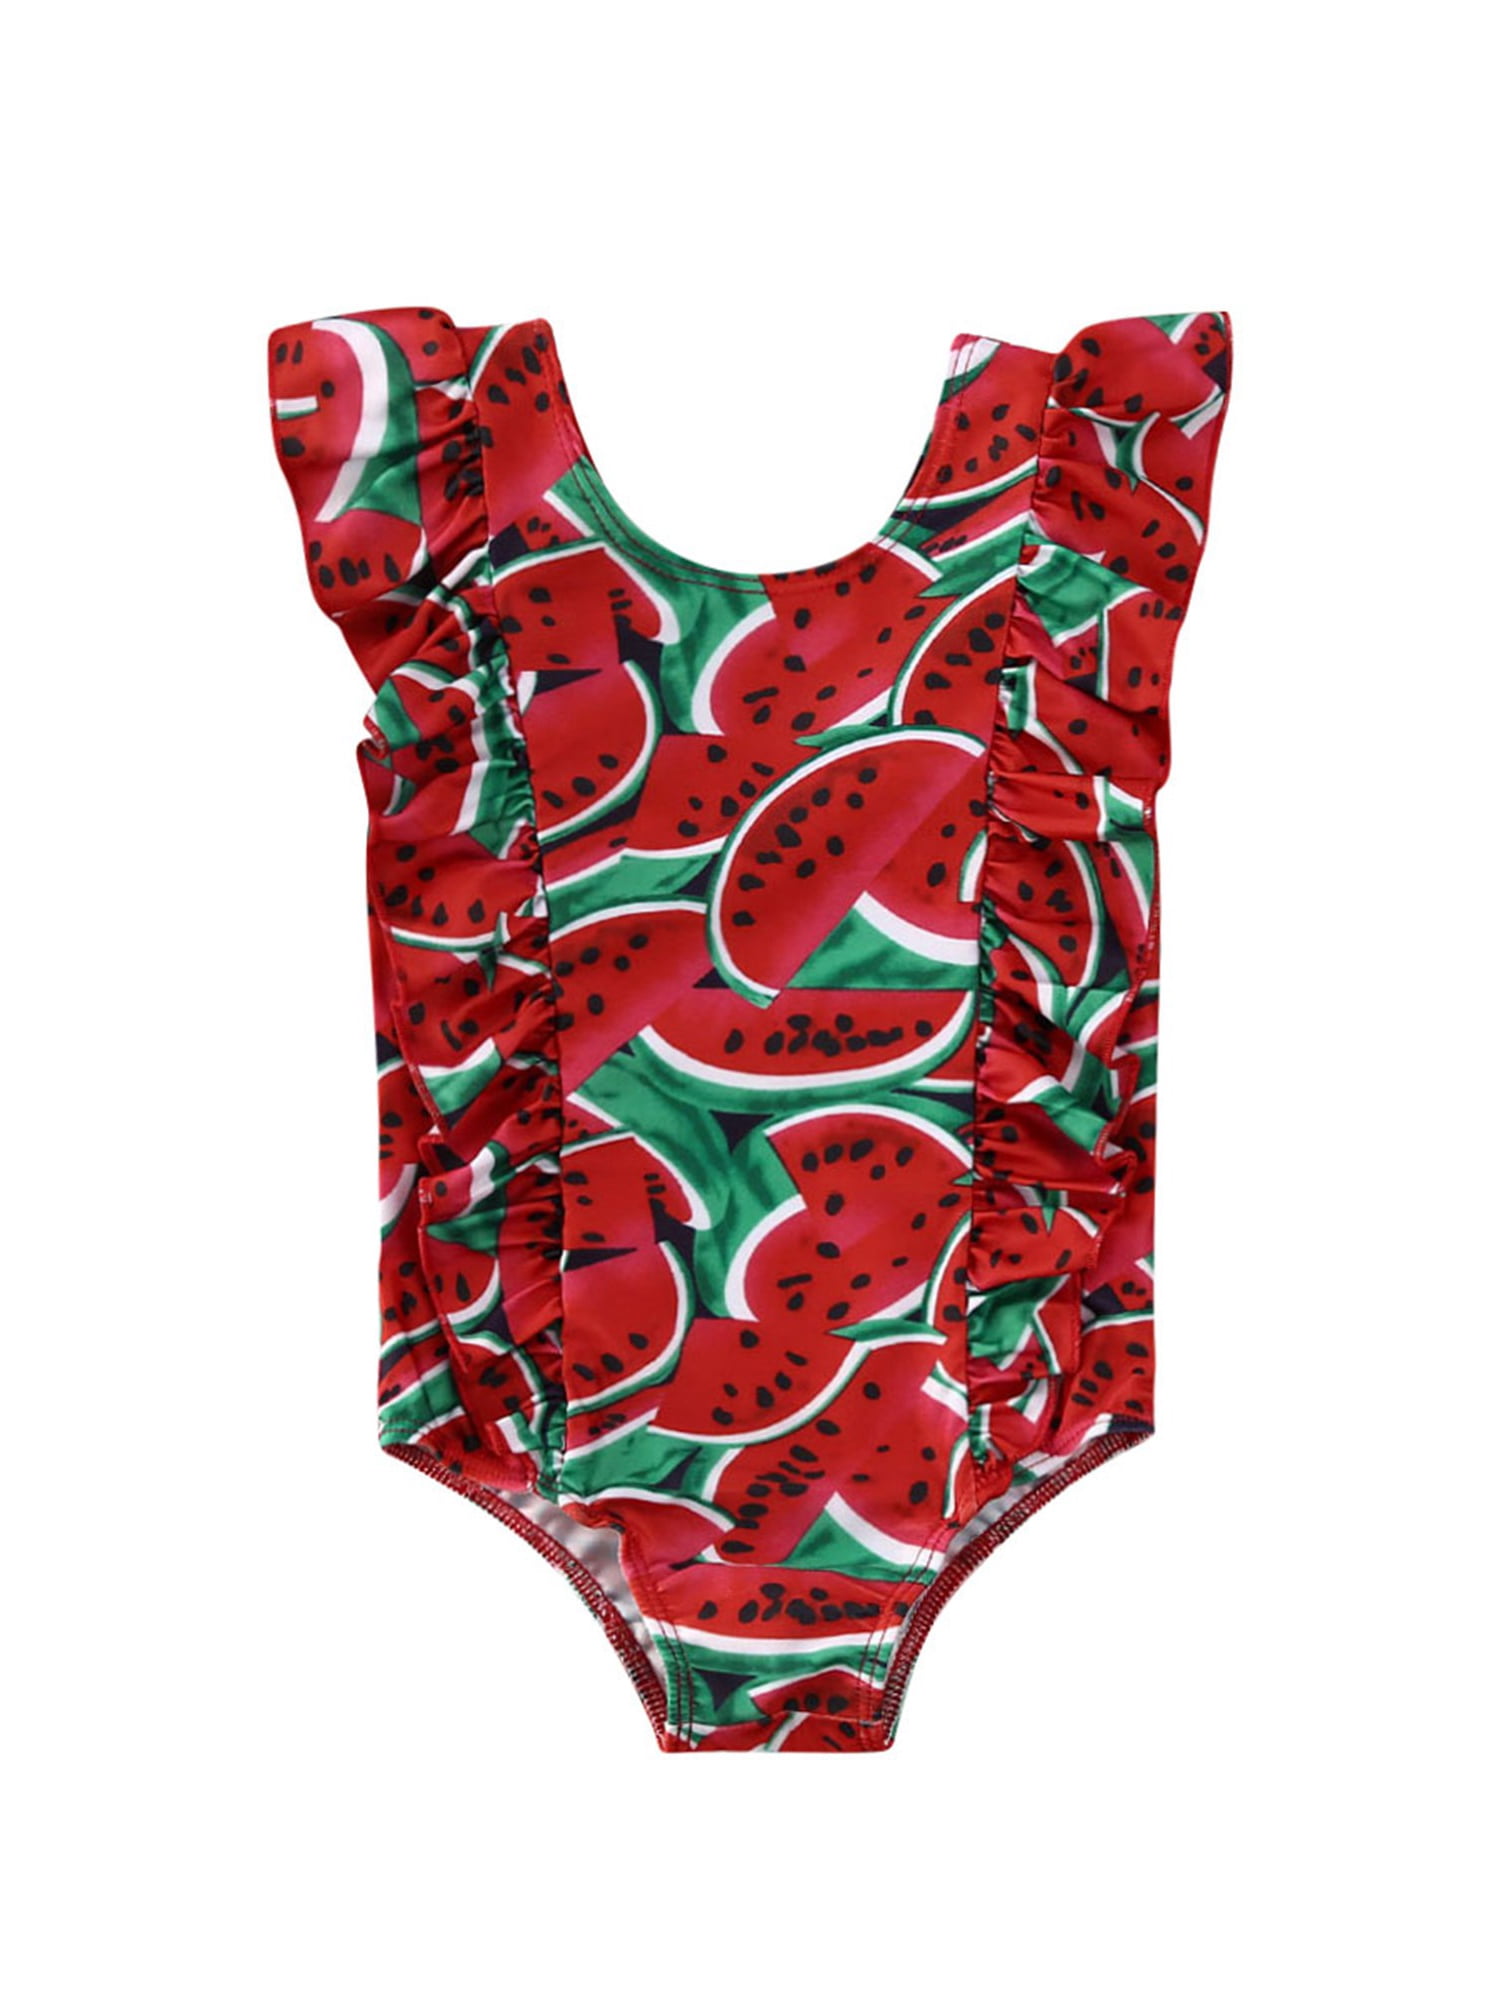 Toddler Kids Baby Girls Watermelon Bikini Suit Swimsuit Swimwear ...